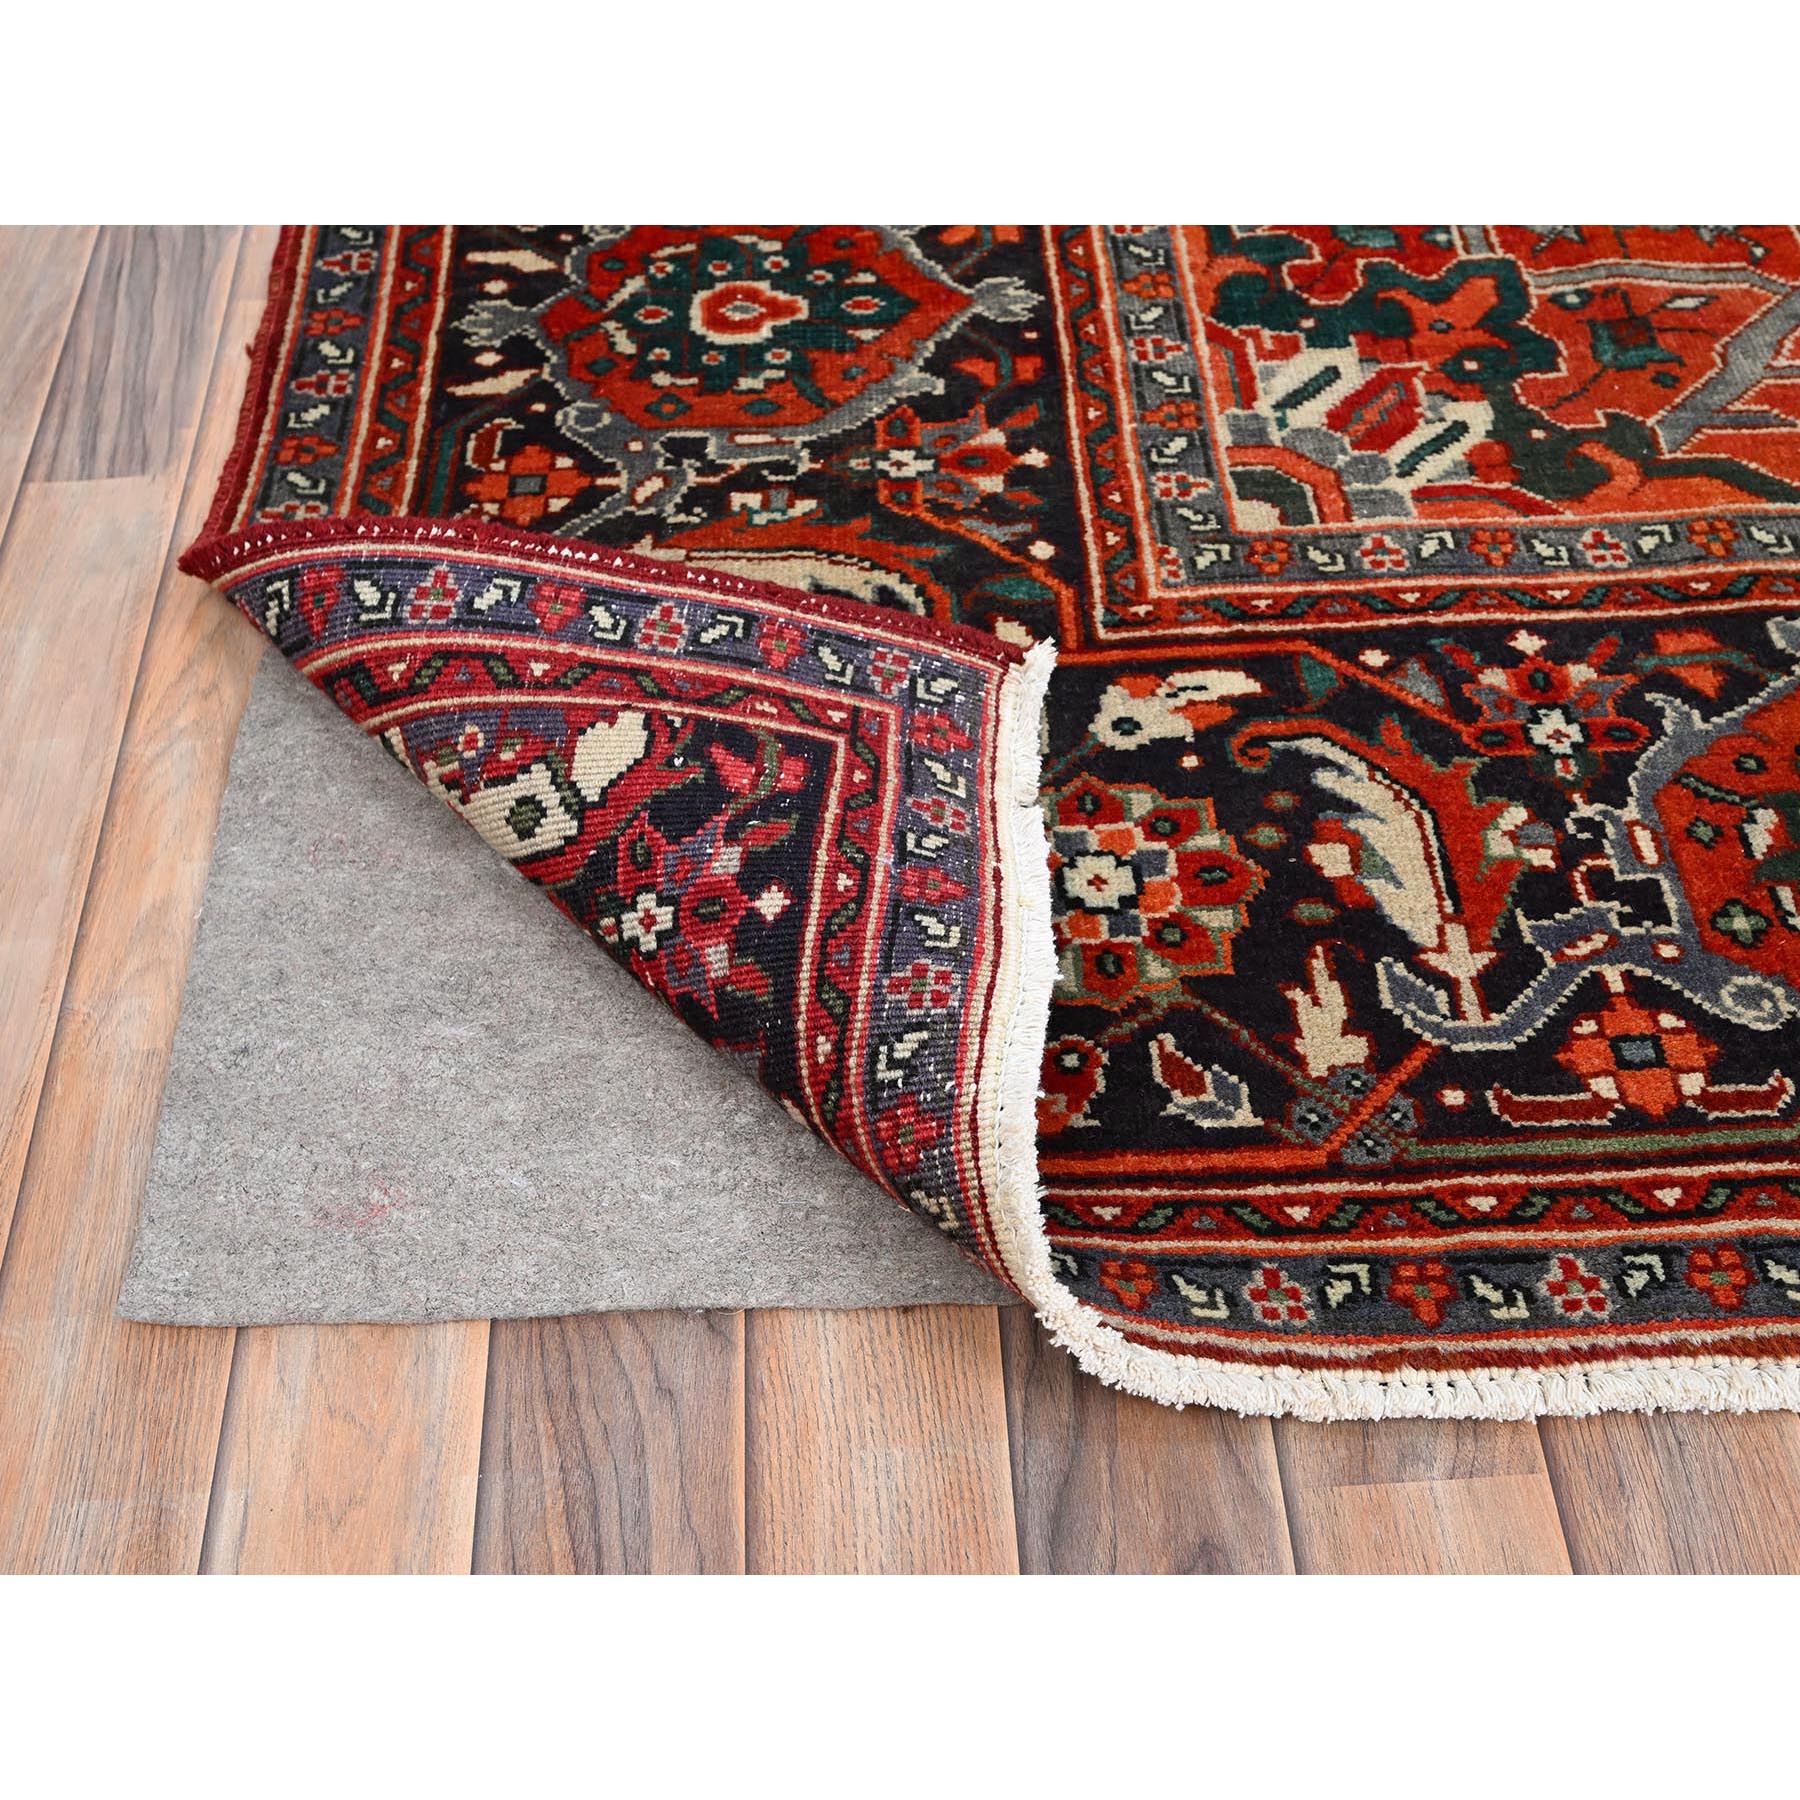 10'x12'6" Crimson Red, Vintage Persian Heriz, Village Motif, Good Condition, Rustic Feel, Worn Wool, Hand Woven, Oriental Rug 